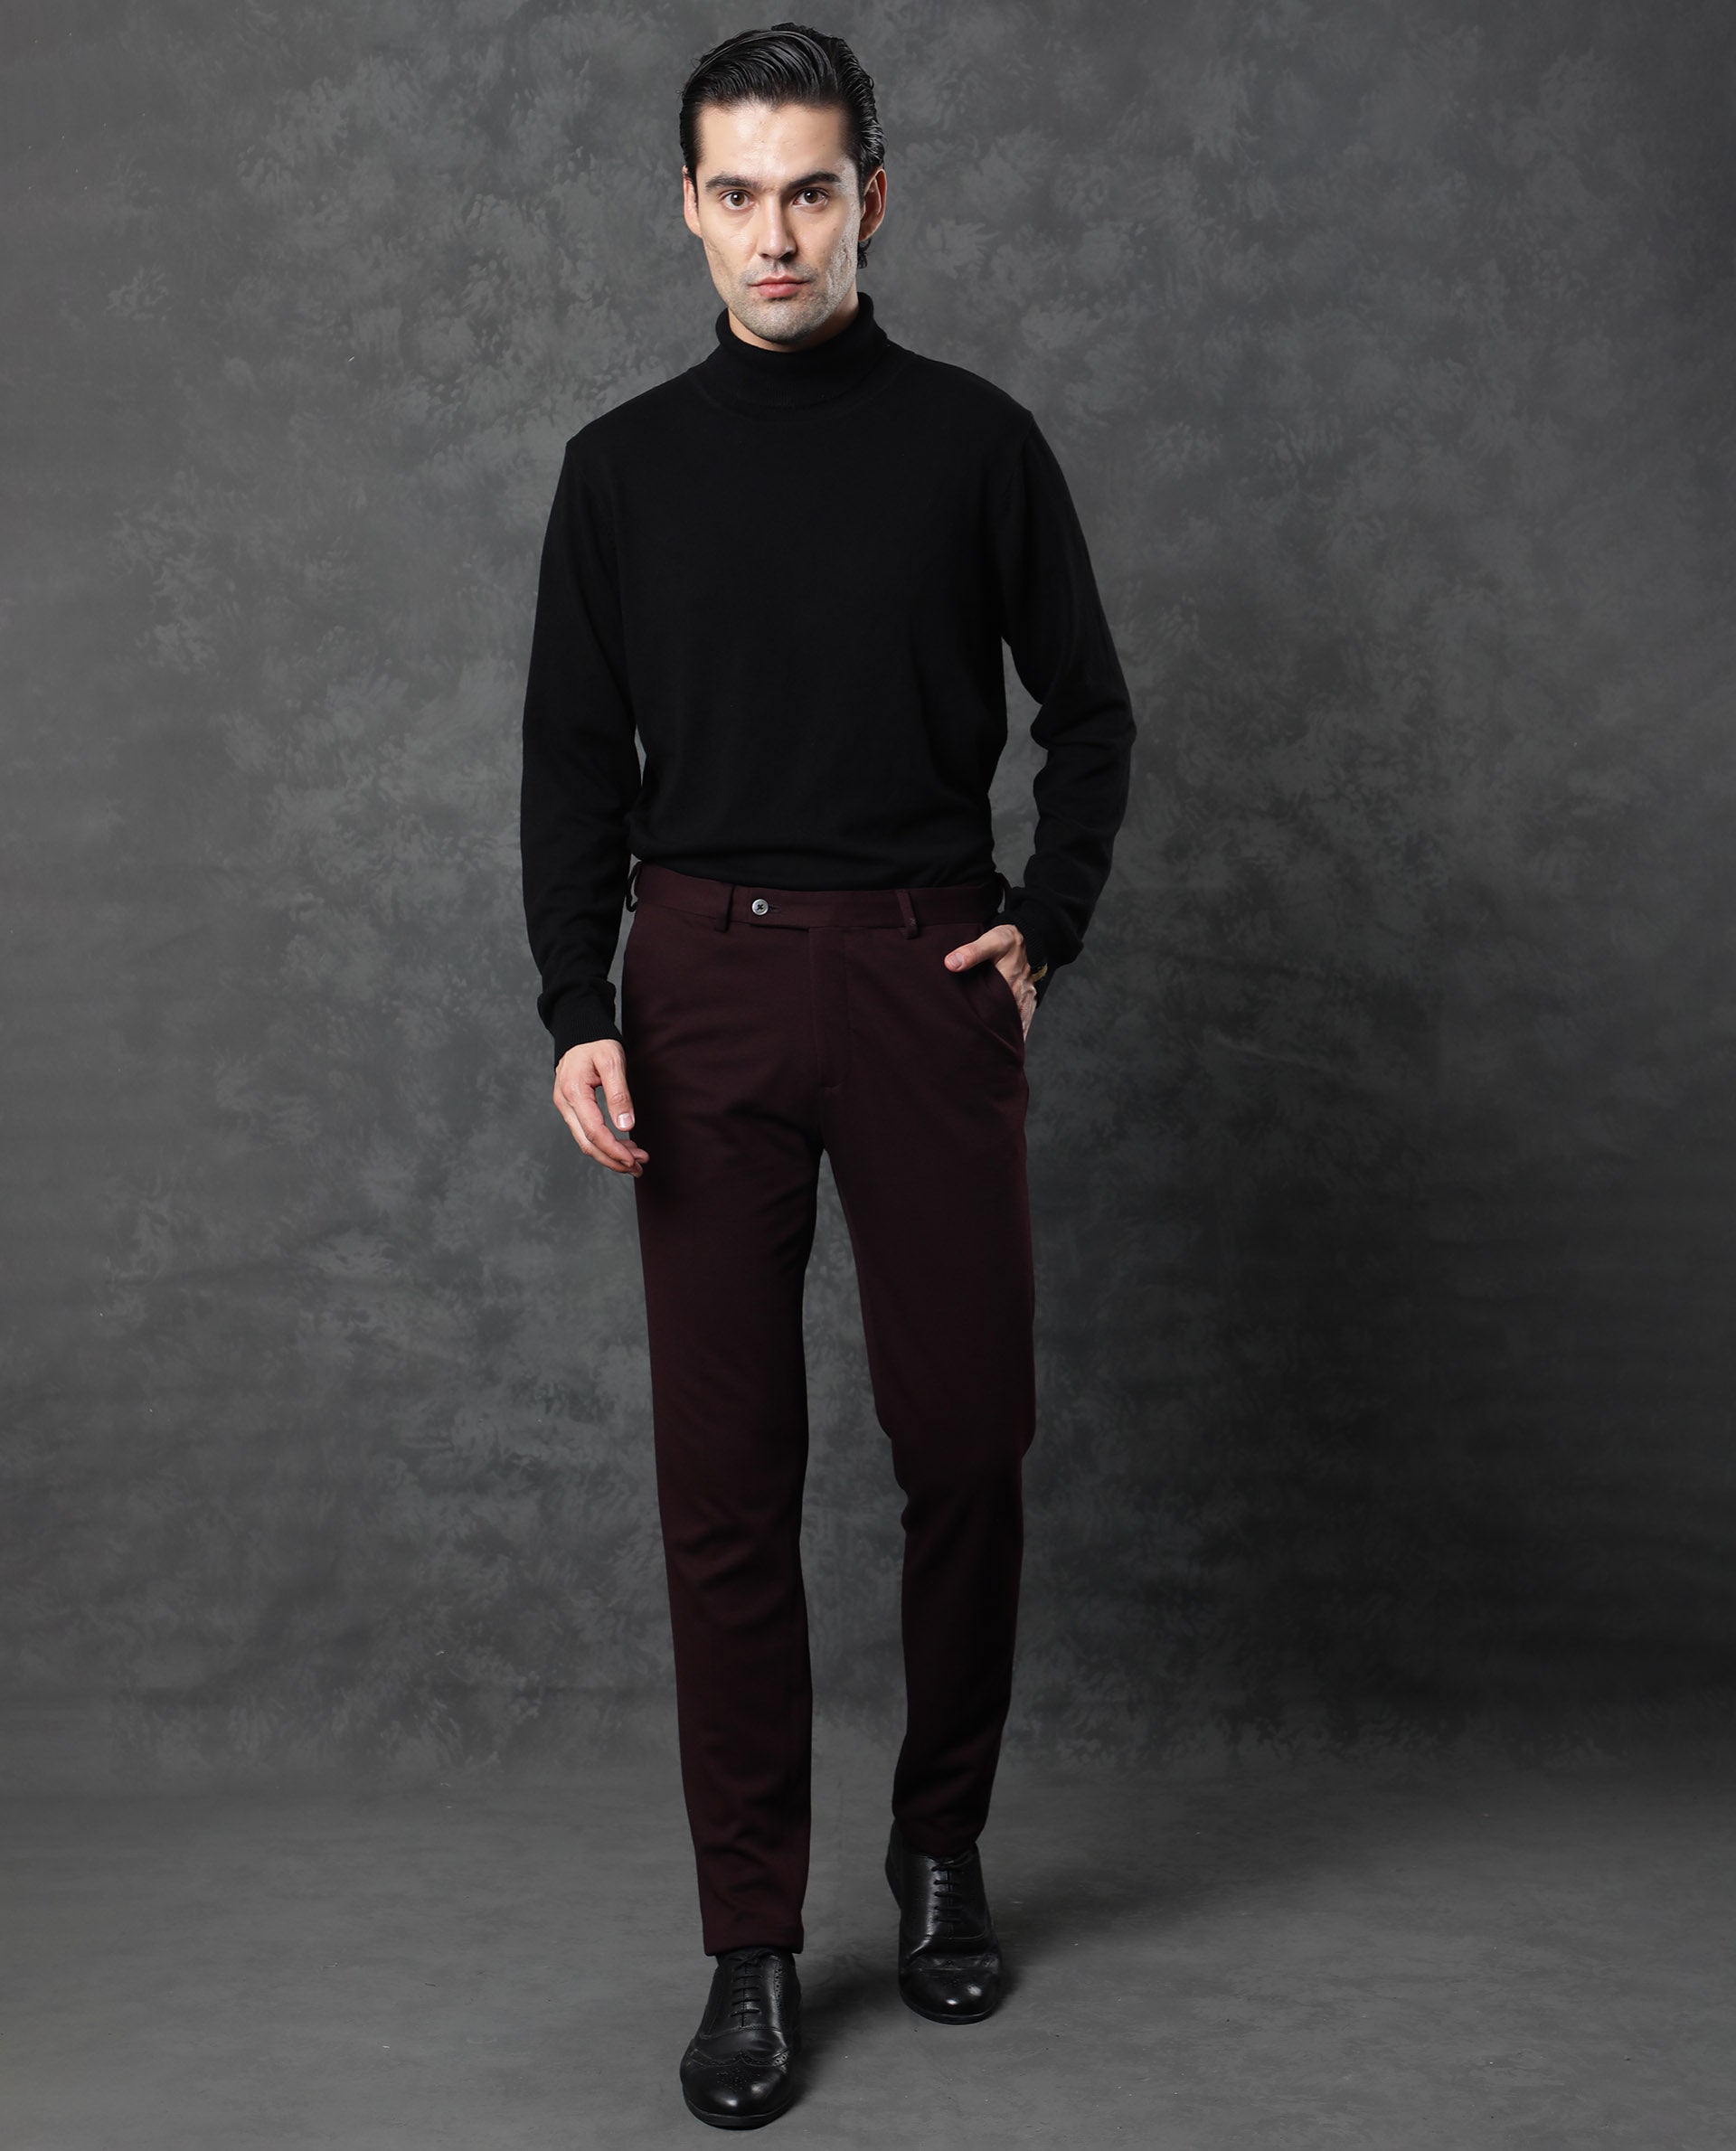 Maroon Blazer Matching Shirt and Pant Ideas  Maroon Blazer Combination Men   TiptopGents